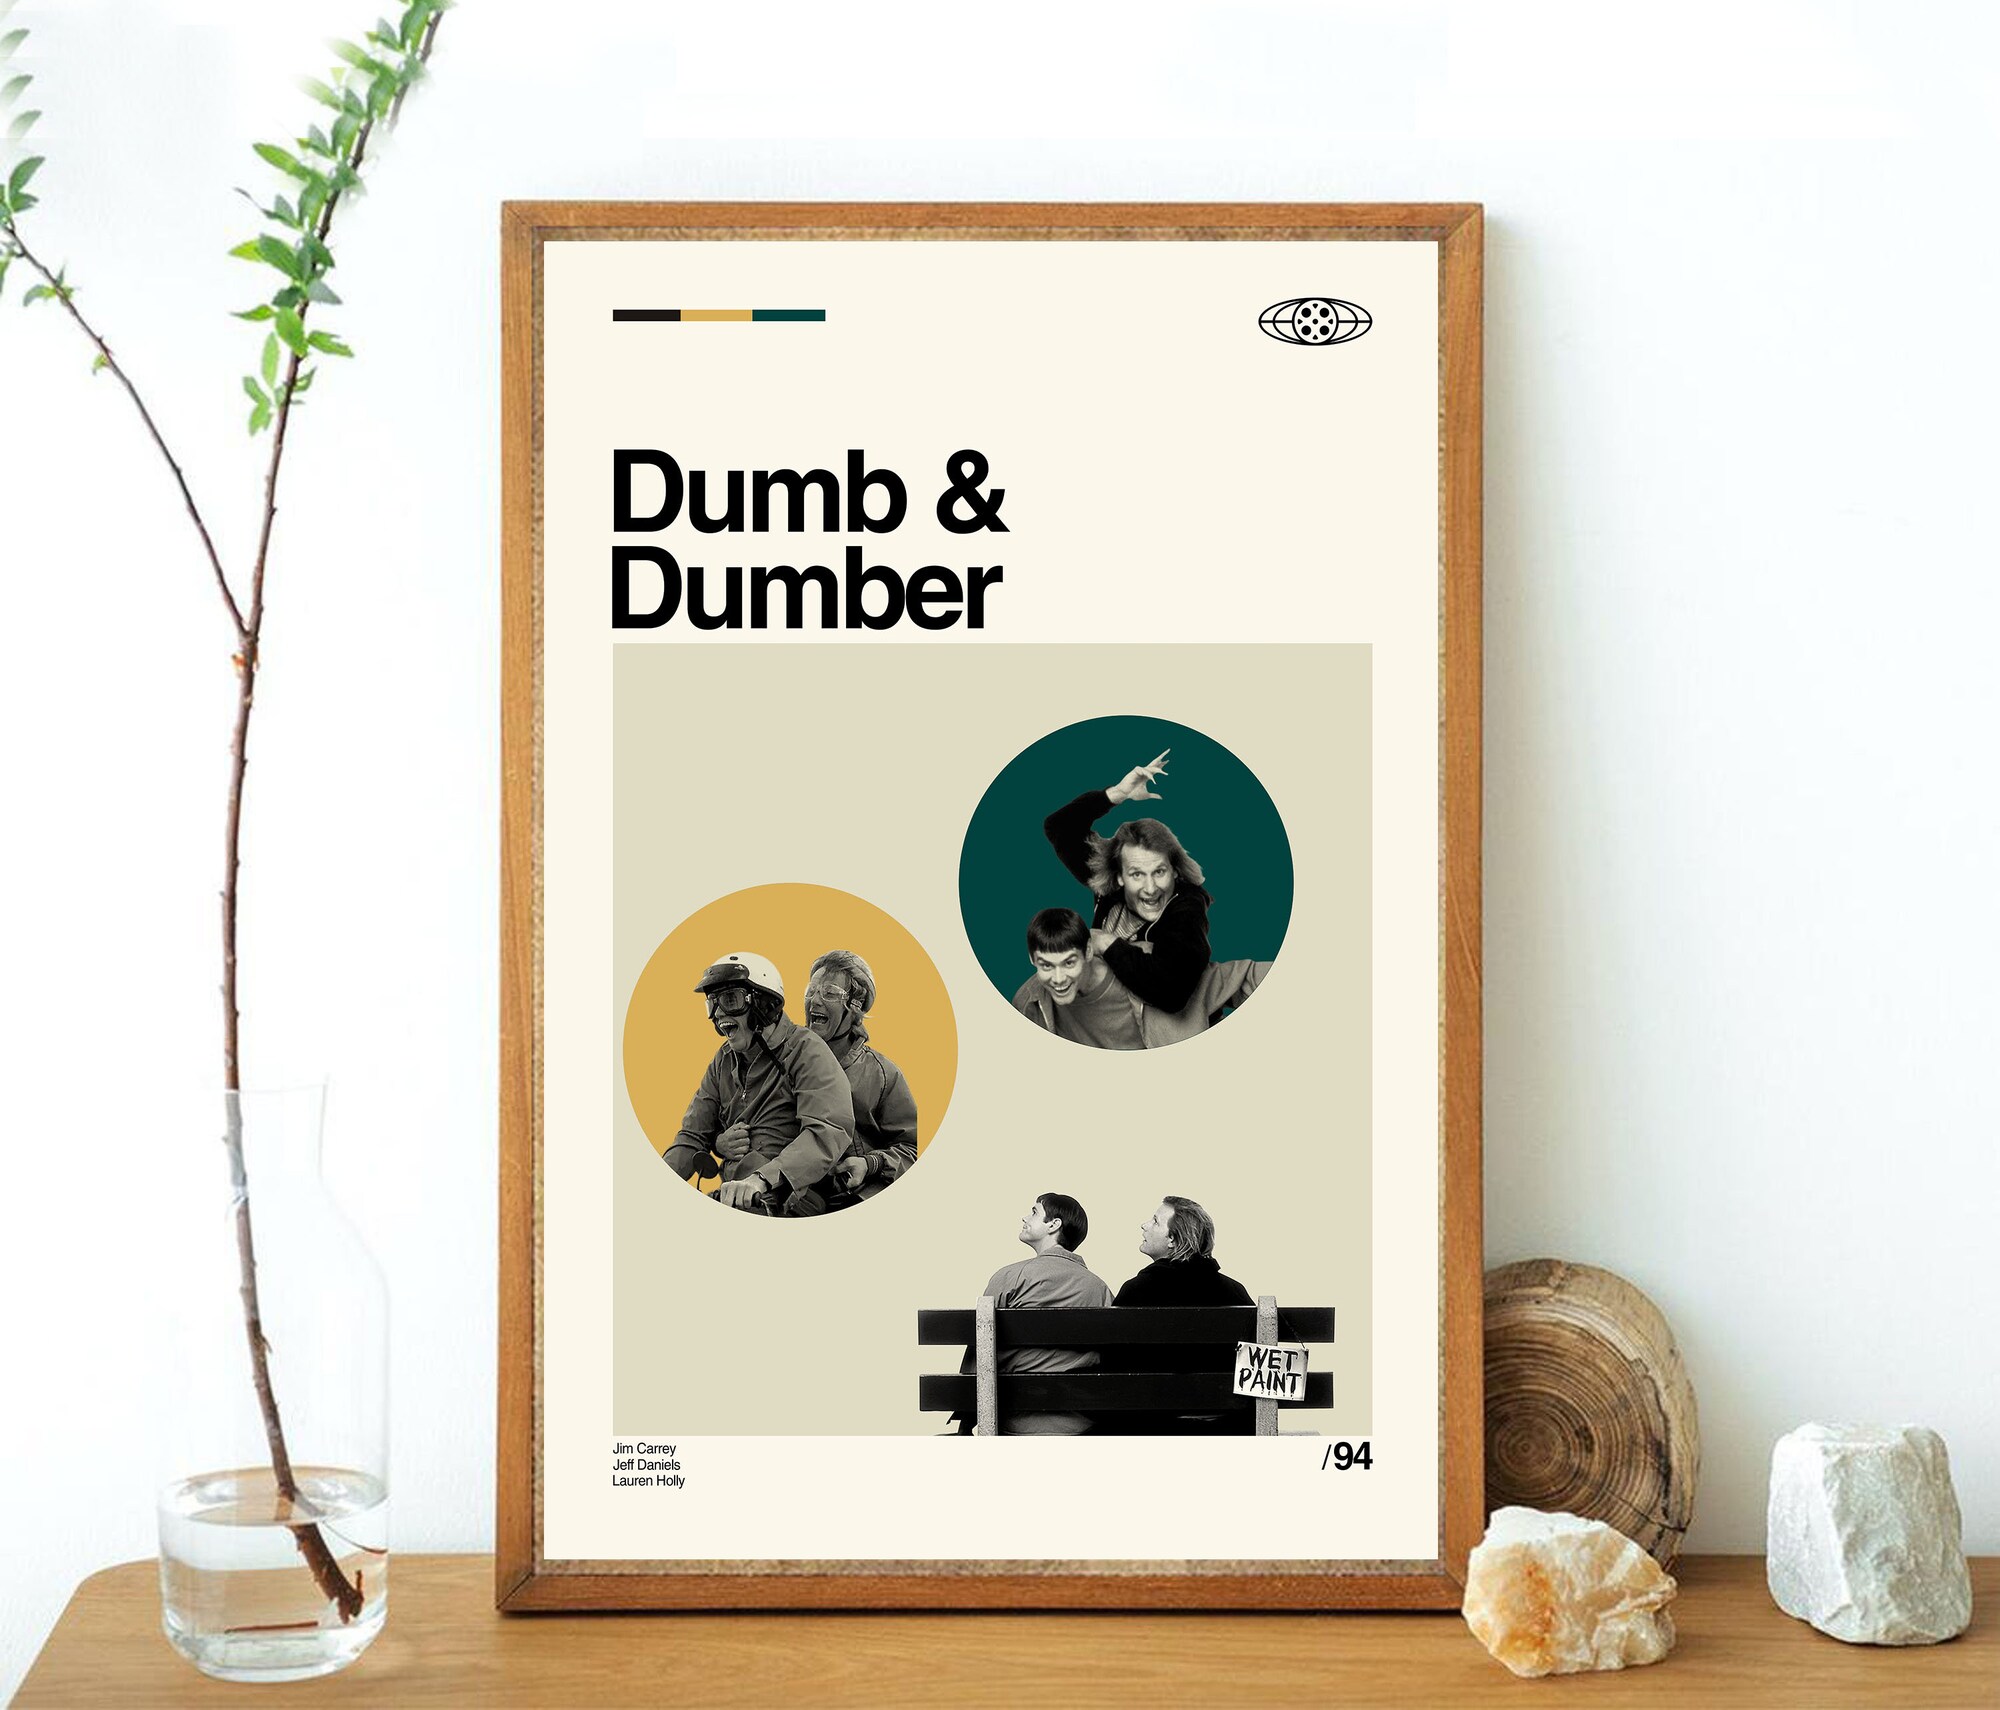 Discover Inspired DUMB AND DUMBER Midcentury Art - retro-modern, vintage inspired Poster